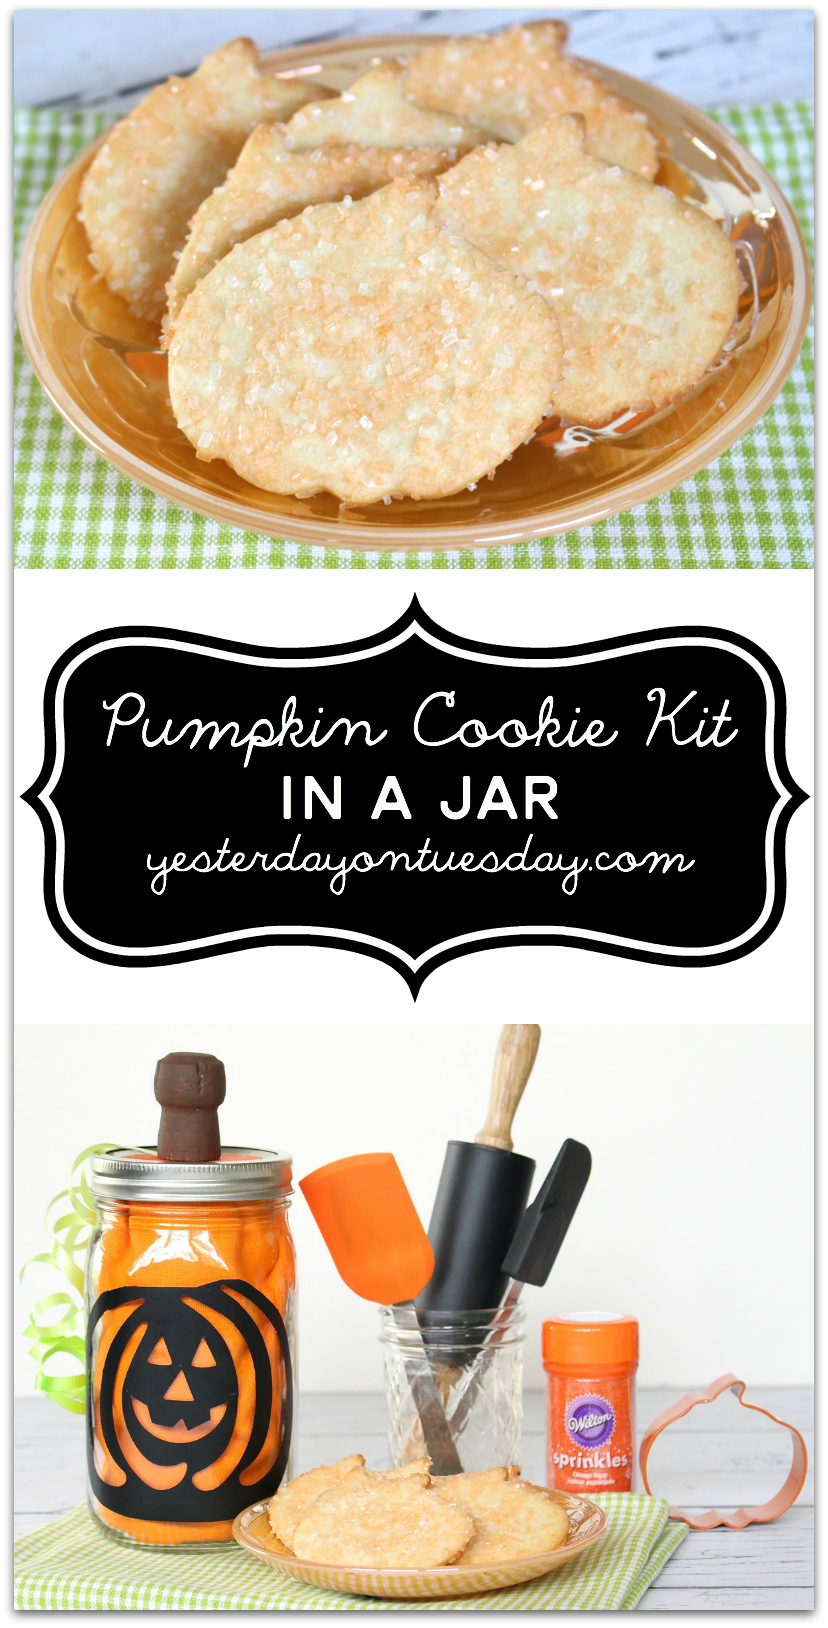 Pumpkin Cookie Kit in a Jar